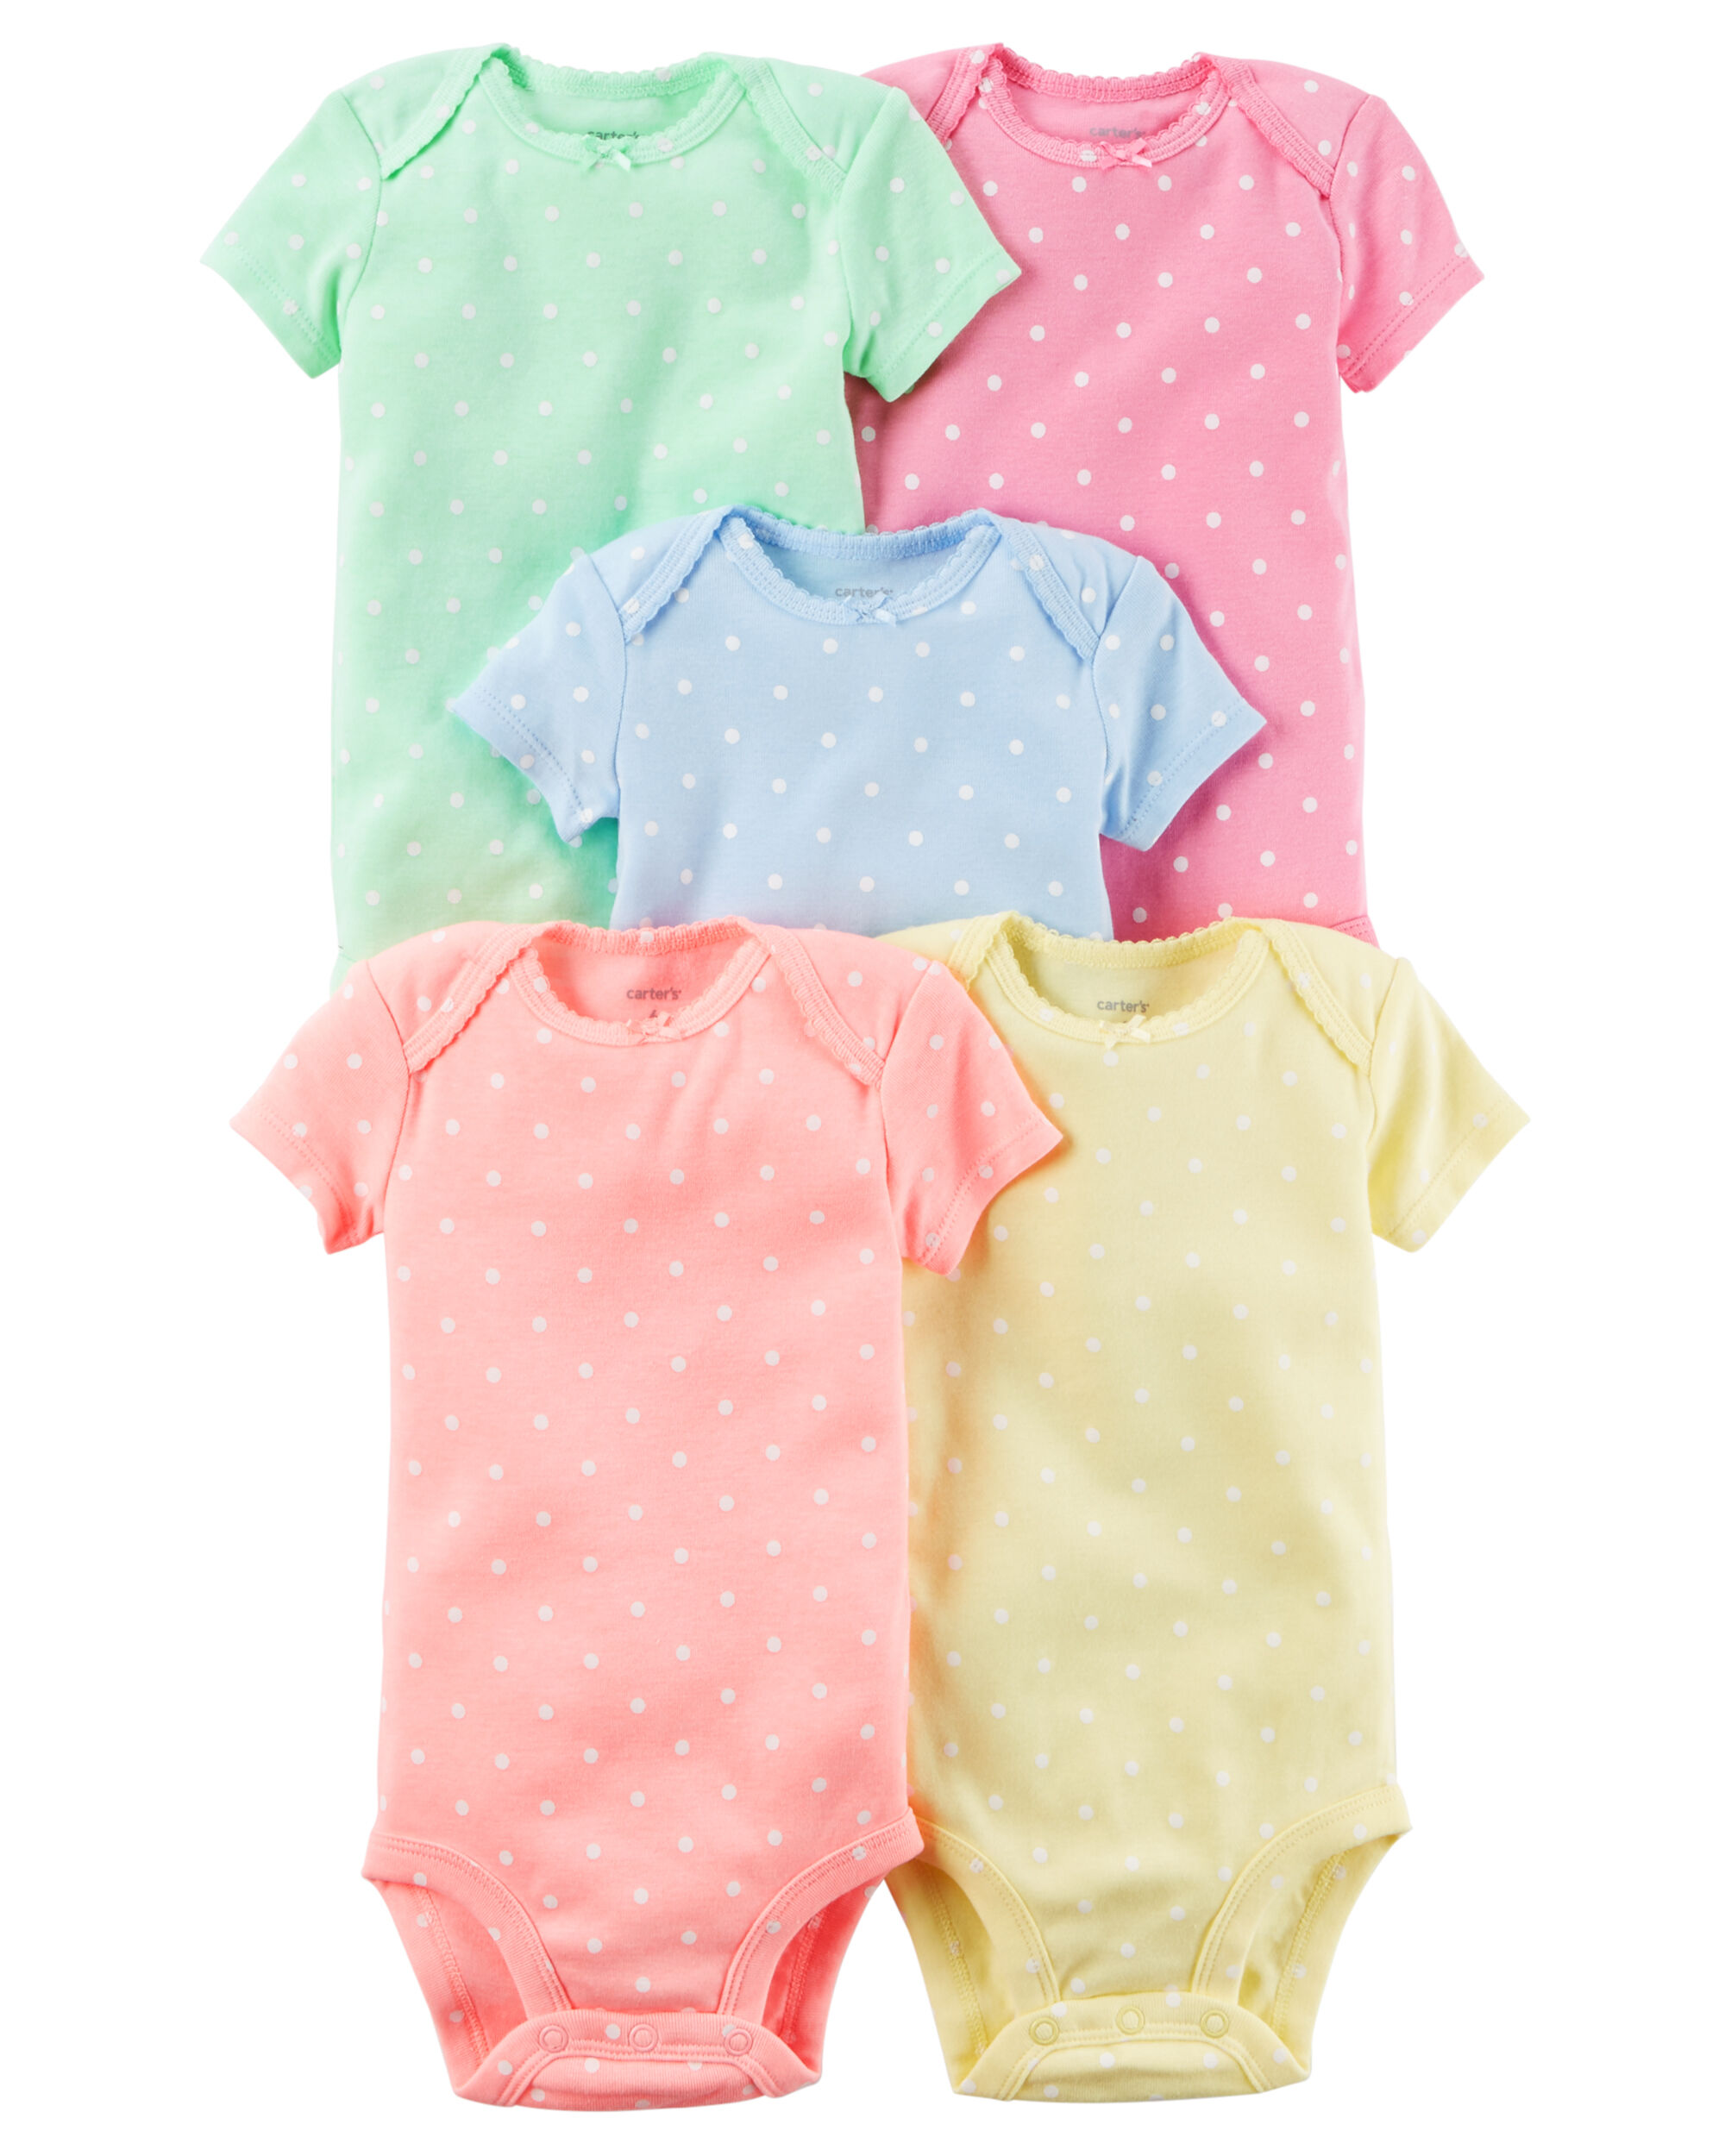 Carters Newborn Clothes Size Chart